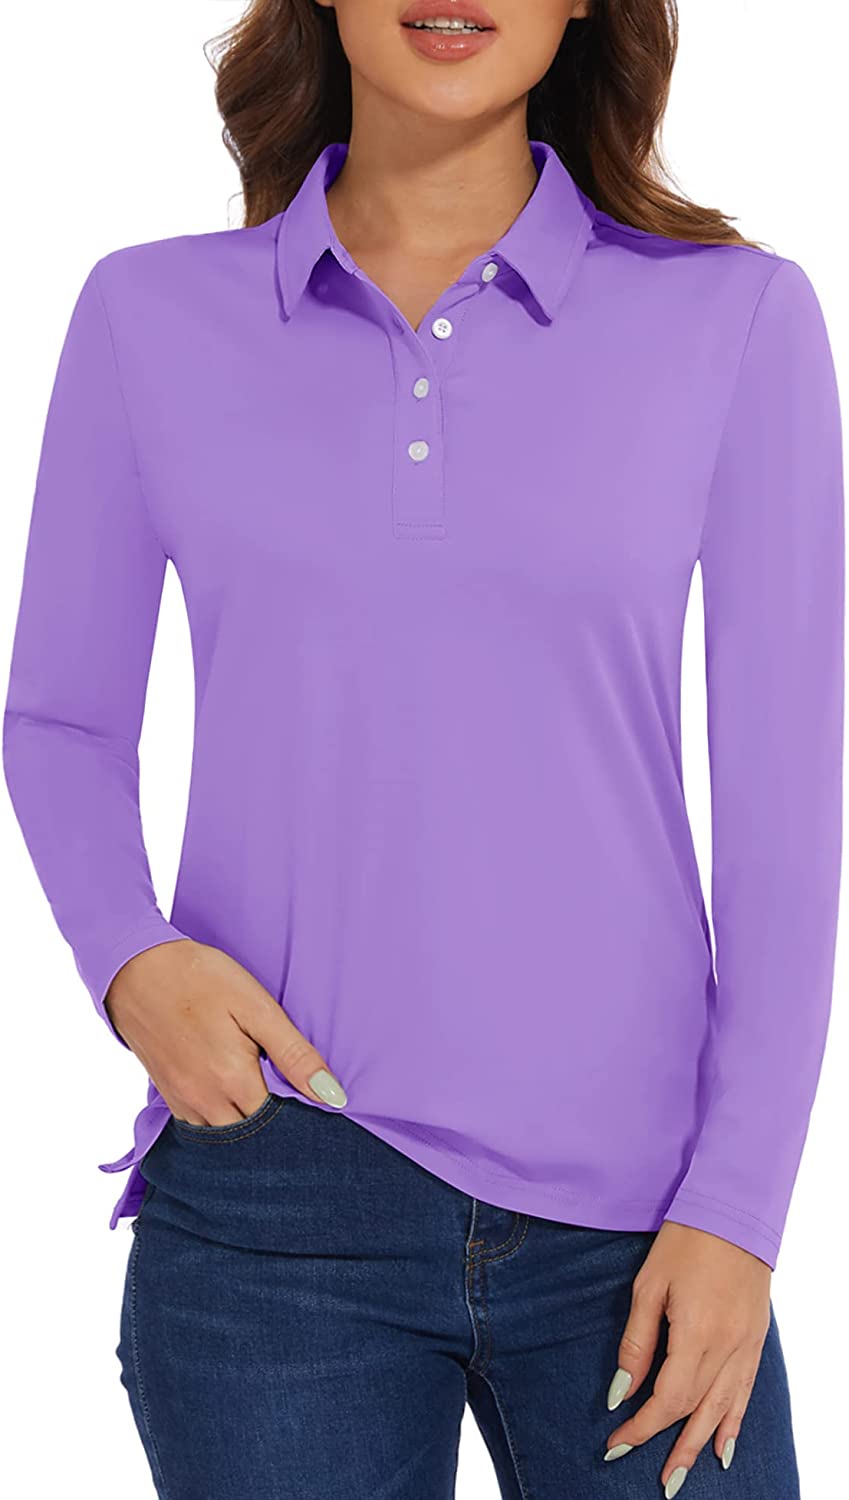 MAGCOMSEN Women's Polo Shirts Long Sleeve Golf T Shirt Quick Dry UPF 50 ...